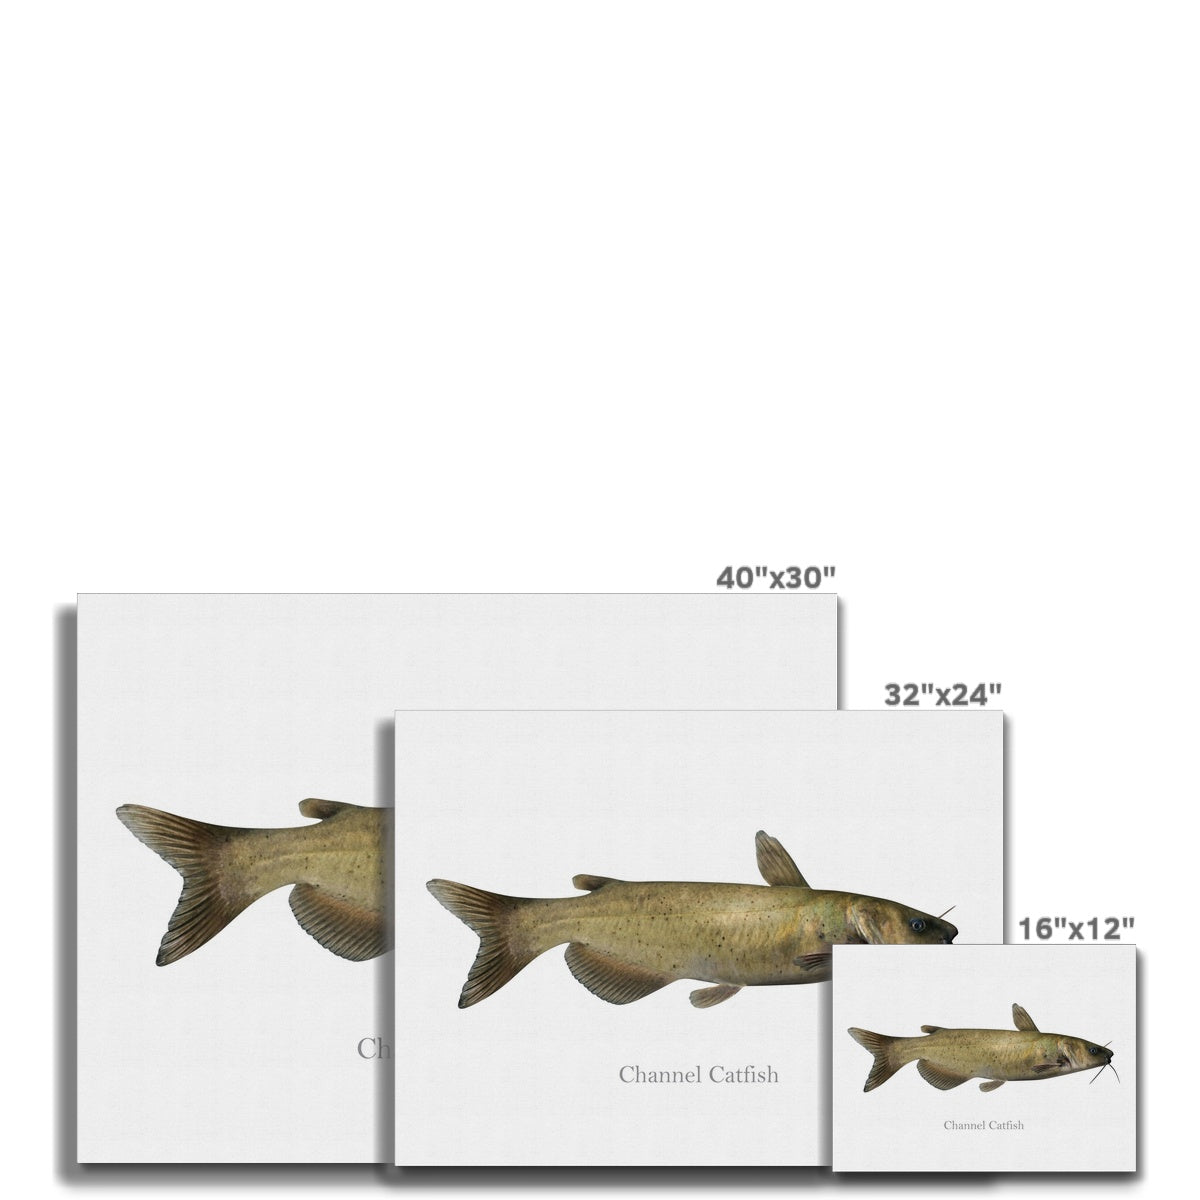 Channel Catfish - Canvas Print - madfishlab.com